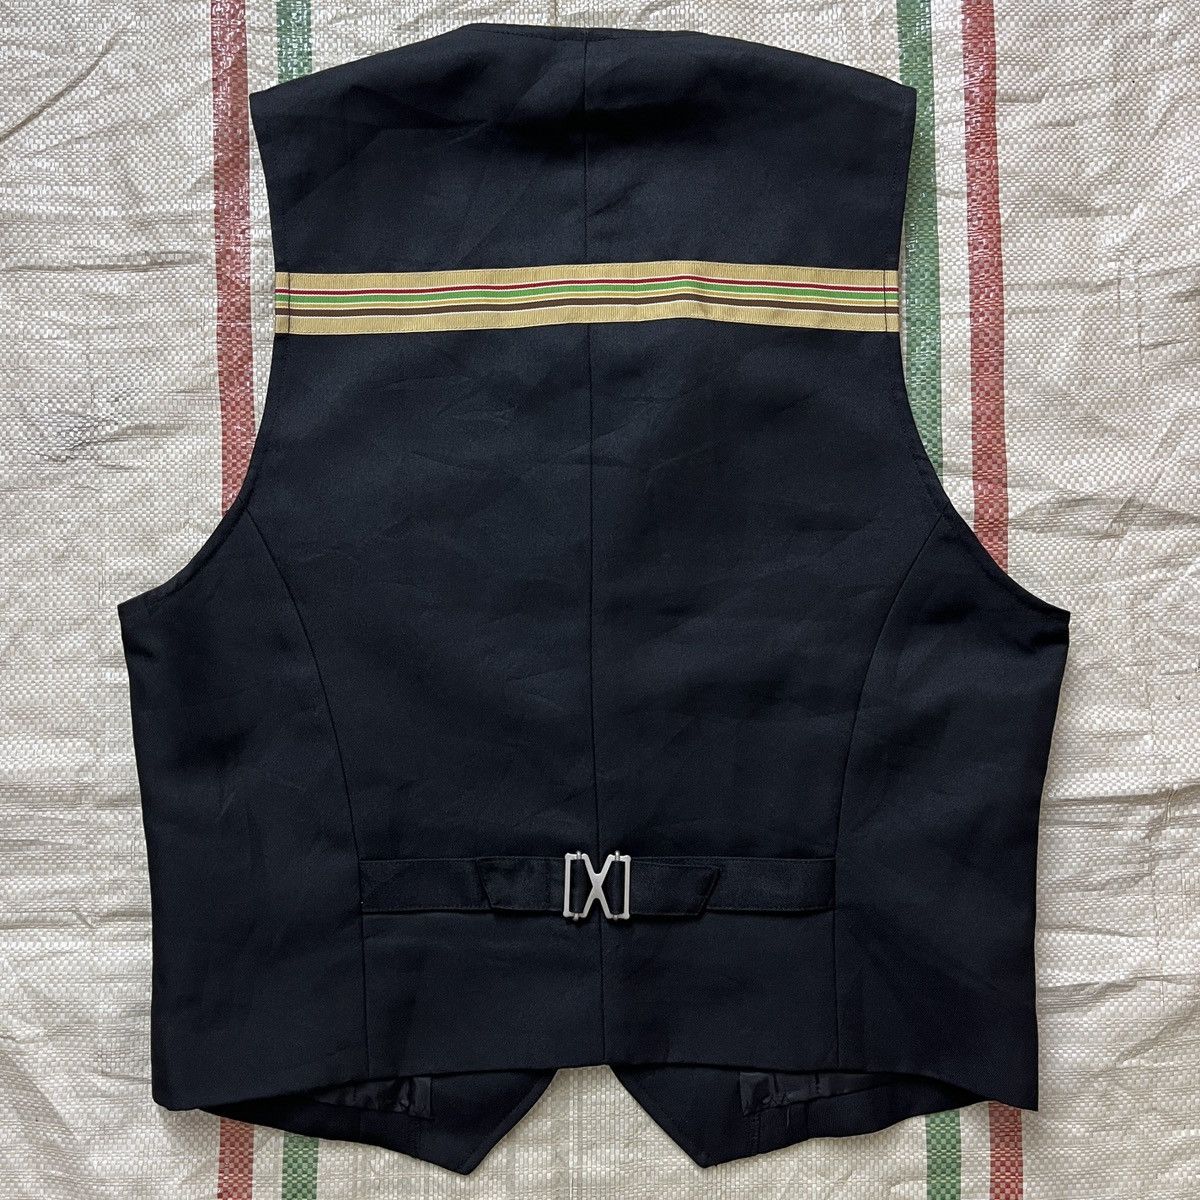 Rare McDonalds Japan Vintage Workers Vest Collector Item - 12